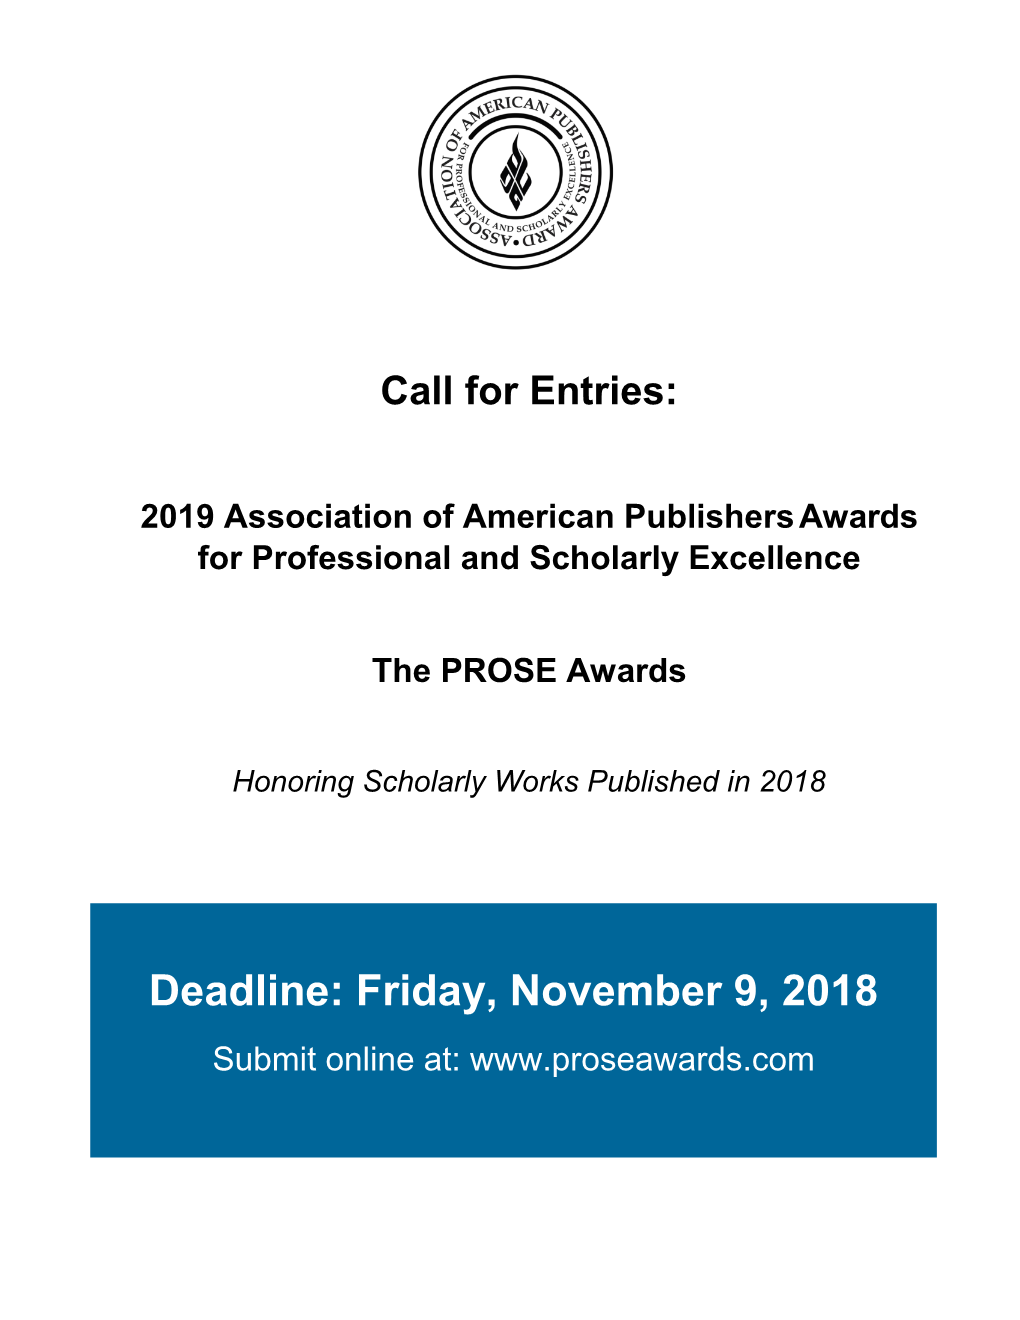 Deadline: Friday, November 9, 2018 Submit Online At